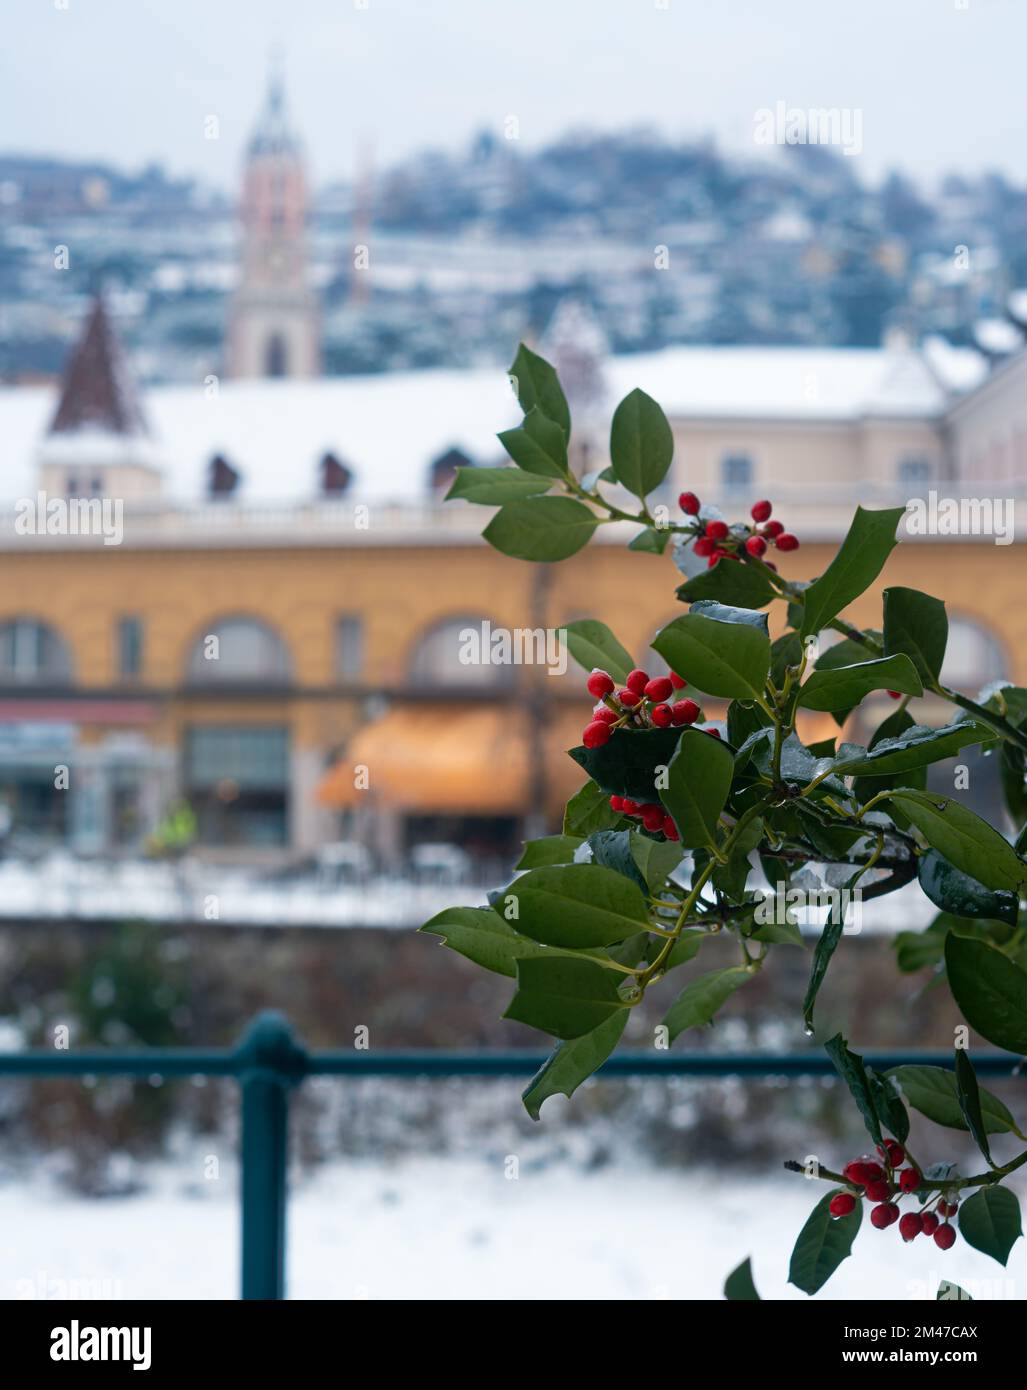 MERANO, ITALY - Coralberry plant (Ardisia Crenata) with a blurred background of the alpine italian city of Merano, Alto Adige, under the snow during t Stock Photo